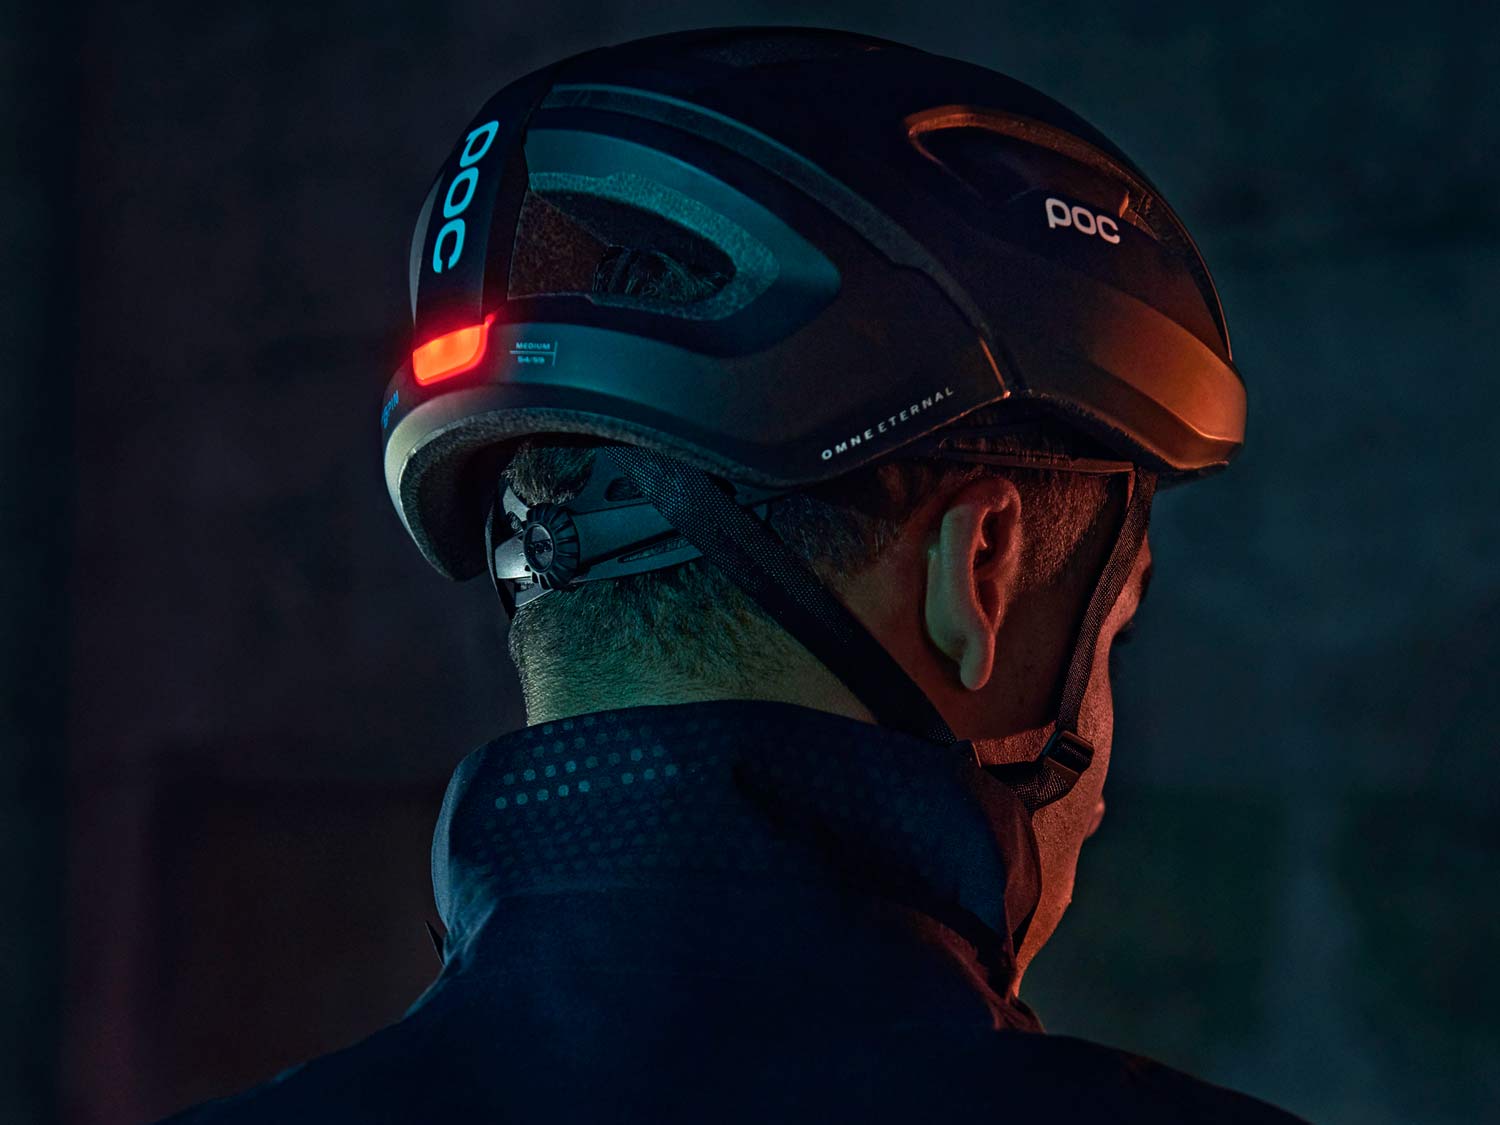 POC Omne Eternal solar-powered helmet with integrated lighting, night mode